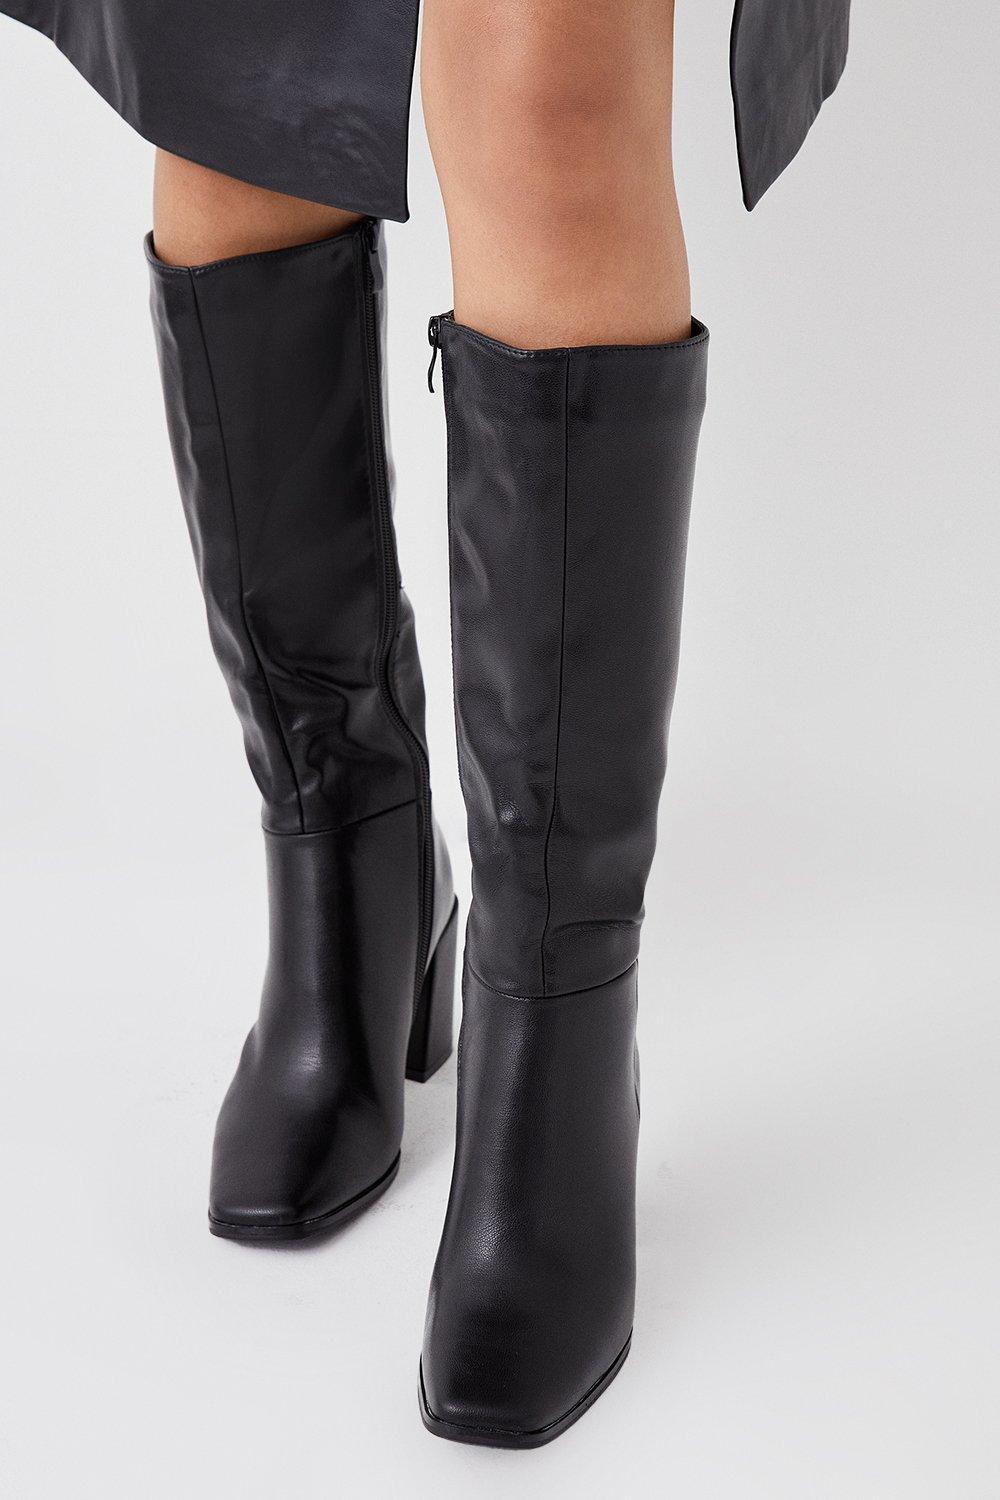 Women’s Kristen Square Toe Clean Knee High Boots - black - 4